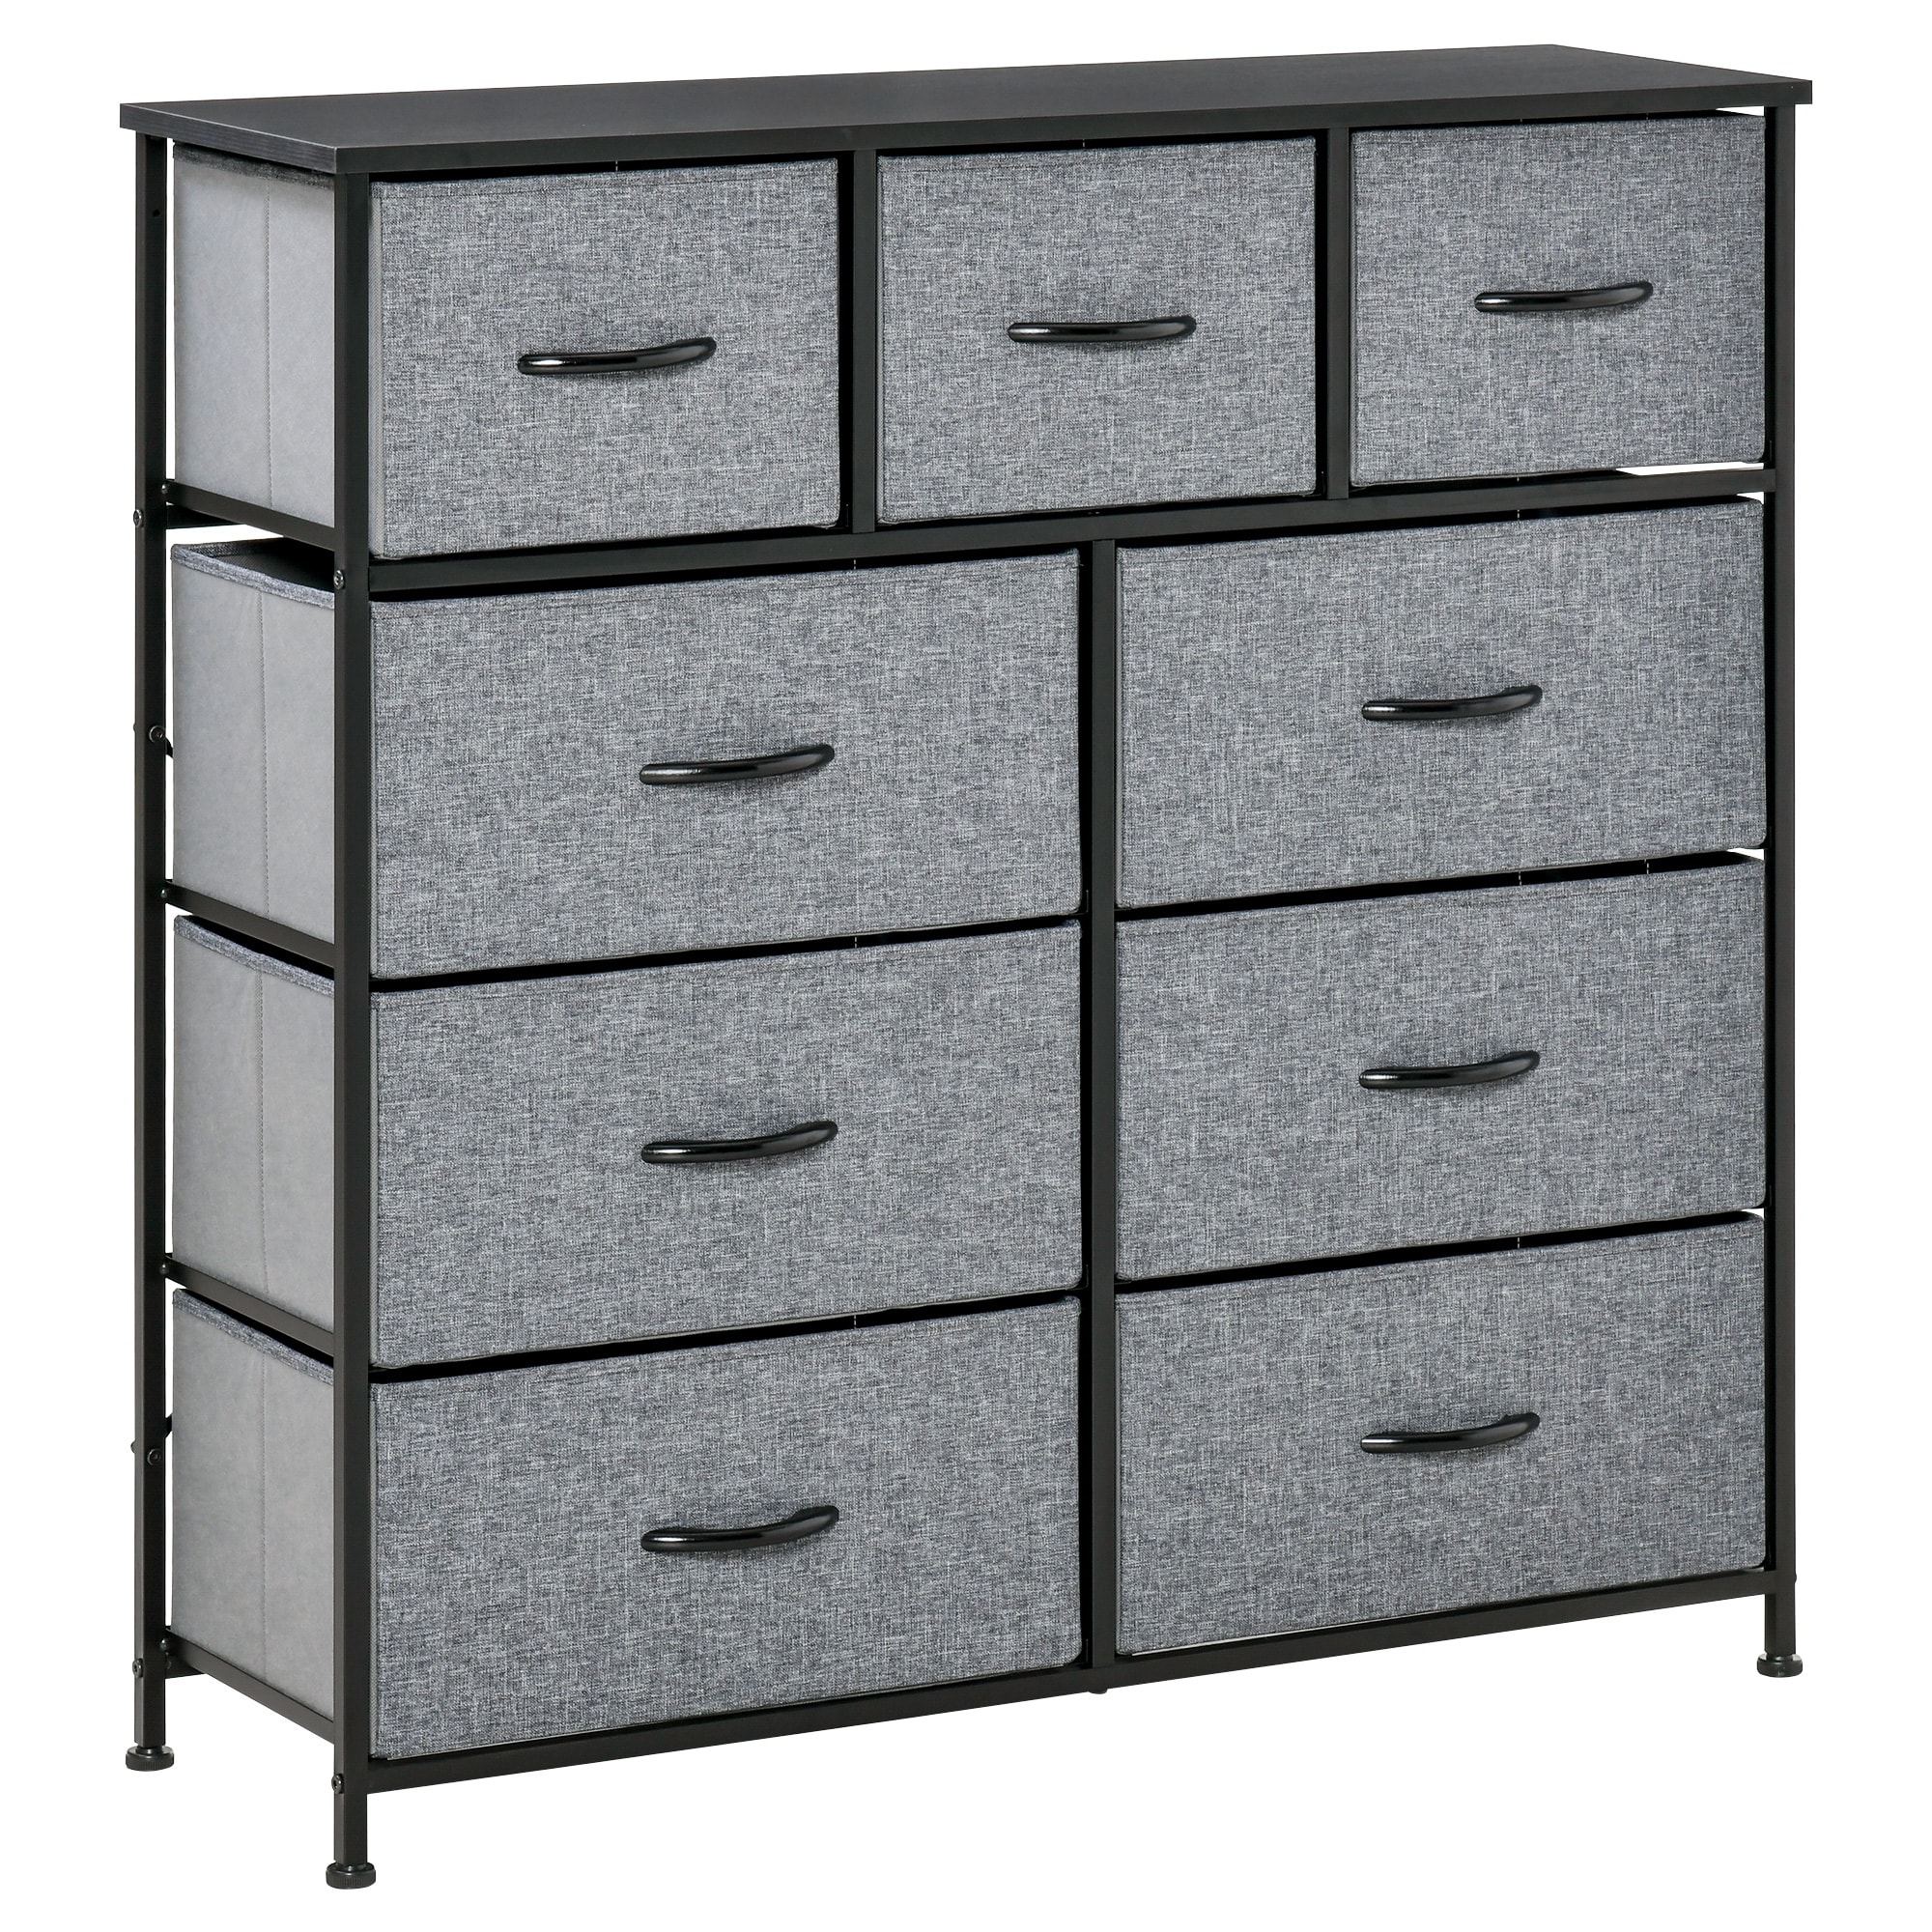 https://ak1.ostkcdn.com/images/products/is/images/direct/28b54a8d7b5633776b8cf6aeebe447e02ddf57a8/HOMCOM-9-Drawers-Storage-Chest-Dresser-Organizer-Unit-w--Steel-Frame%2C-Wood-Top%2C-Easy-Pull-Fabric-Bins%2C-for-Bedroom%2C-Hallway.jpg